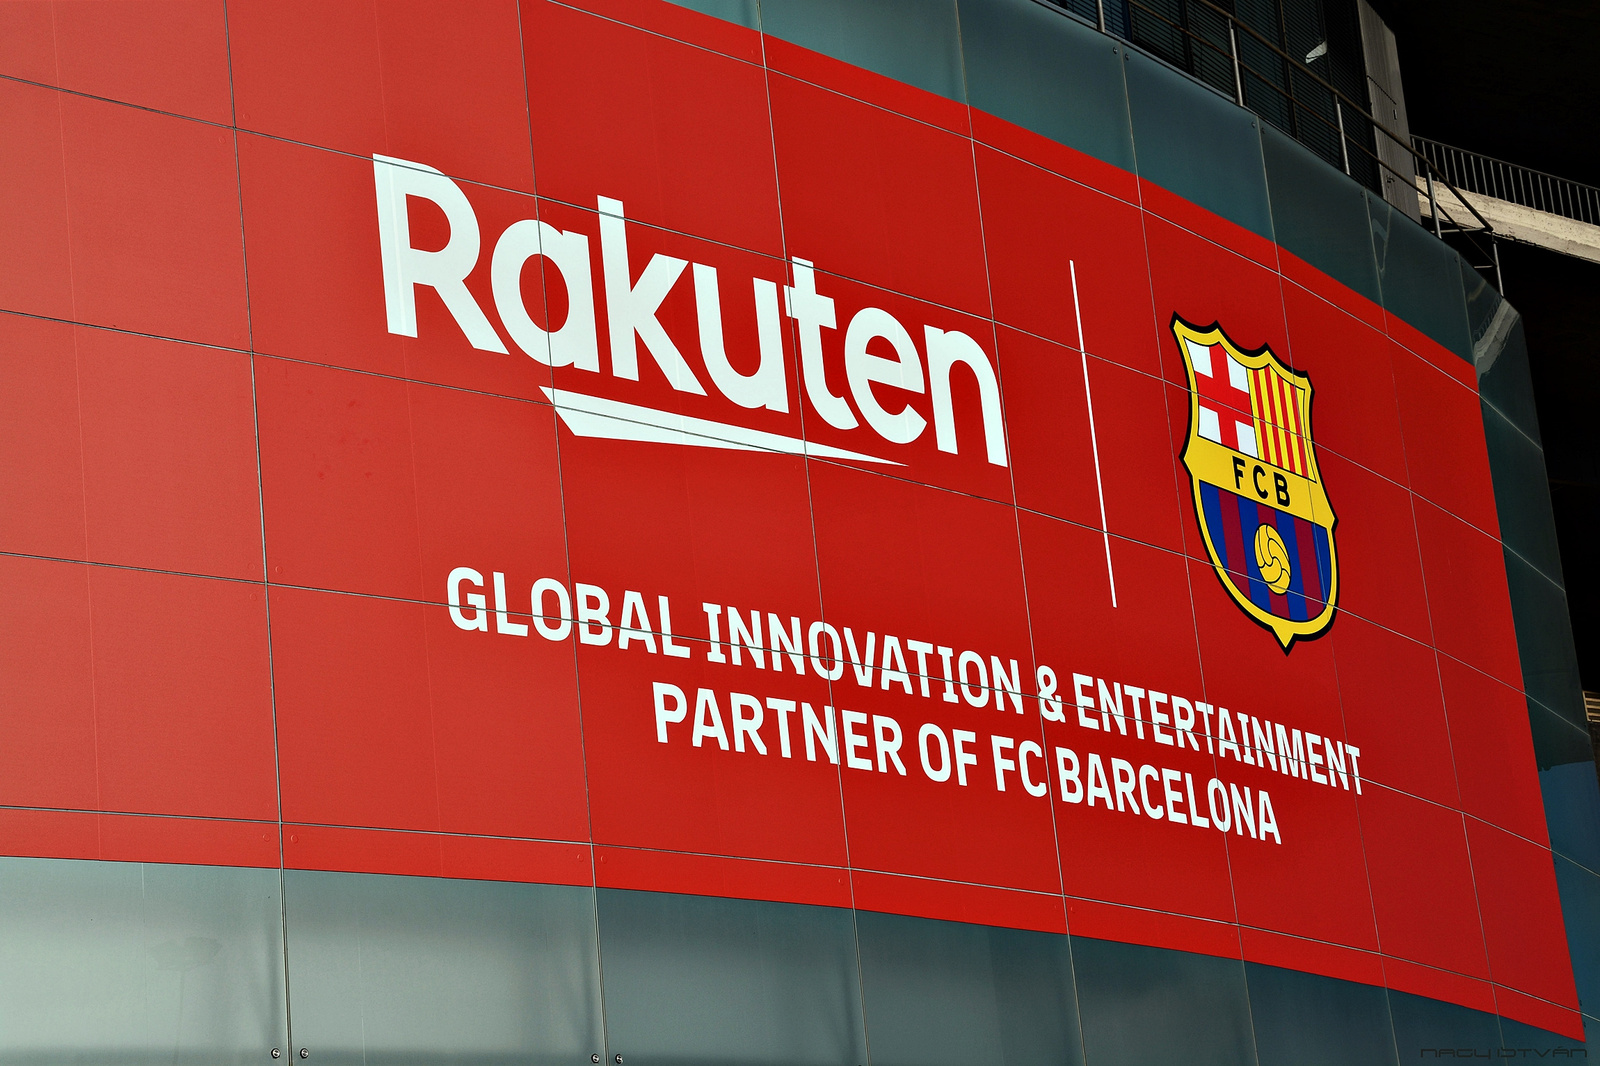 Rakuten banner at the Camp Nou entrance 03